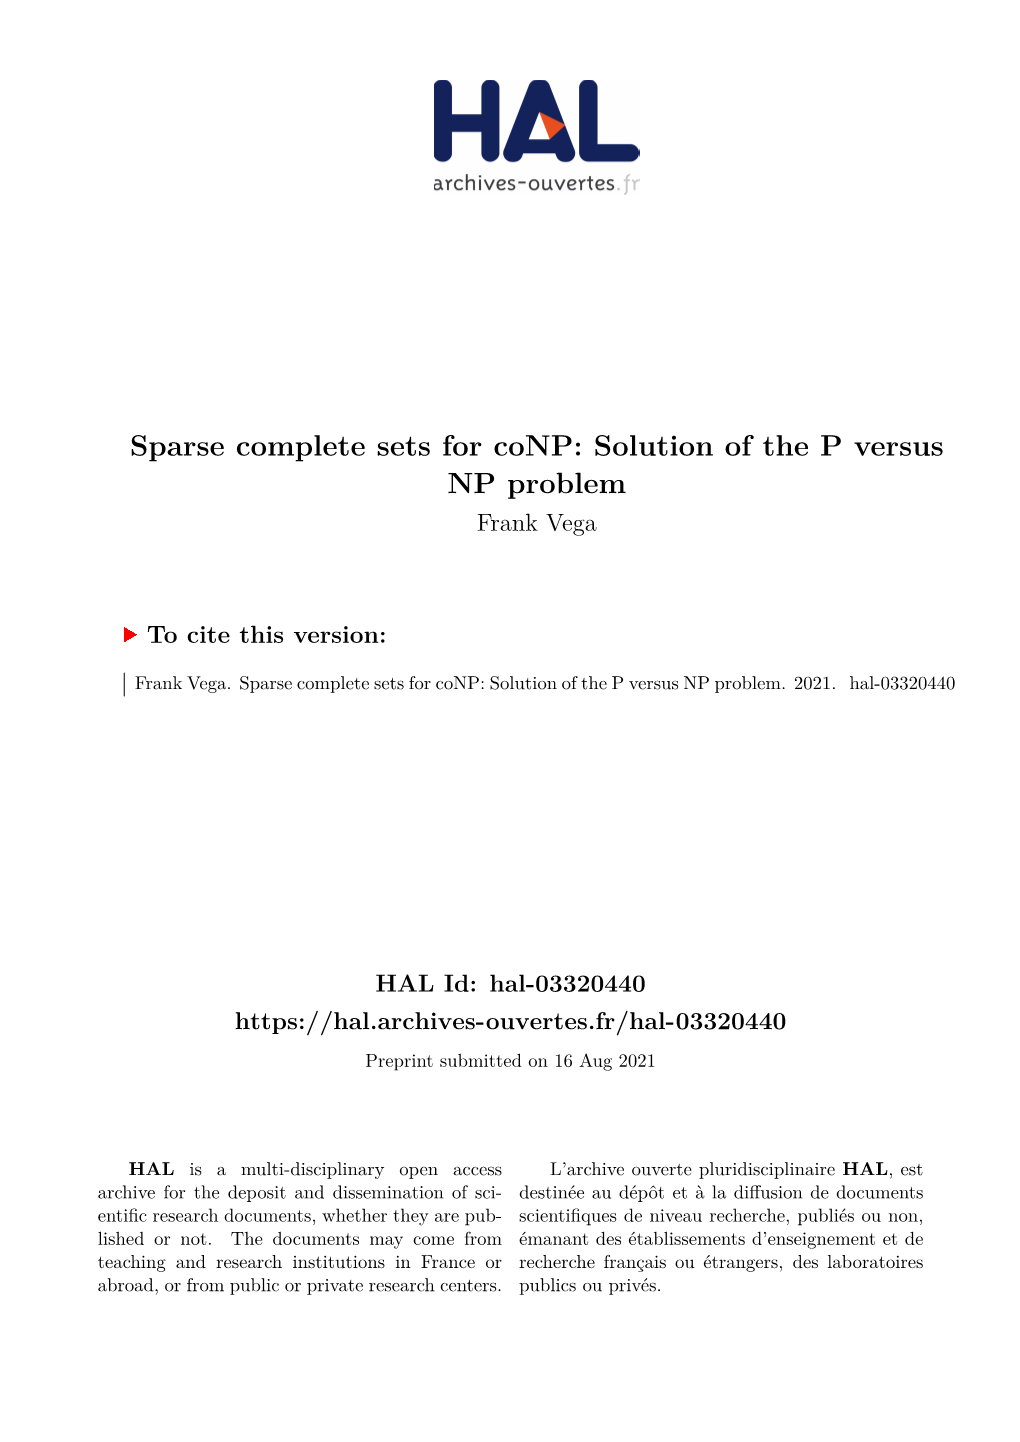 Sparse Complete Sets for Conp: Solution of the P Versus NP Problem Frank Vega